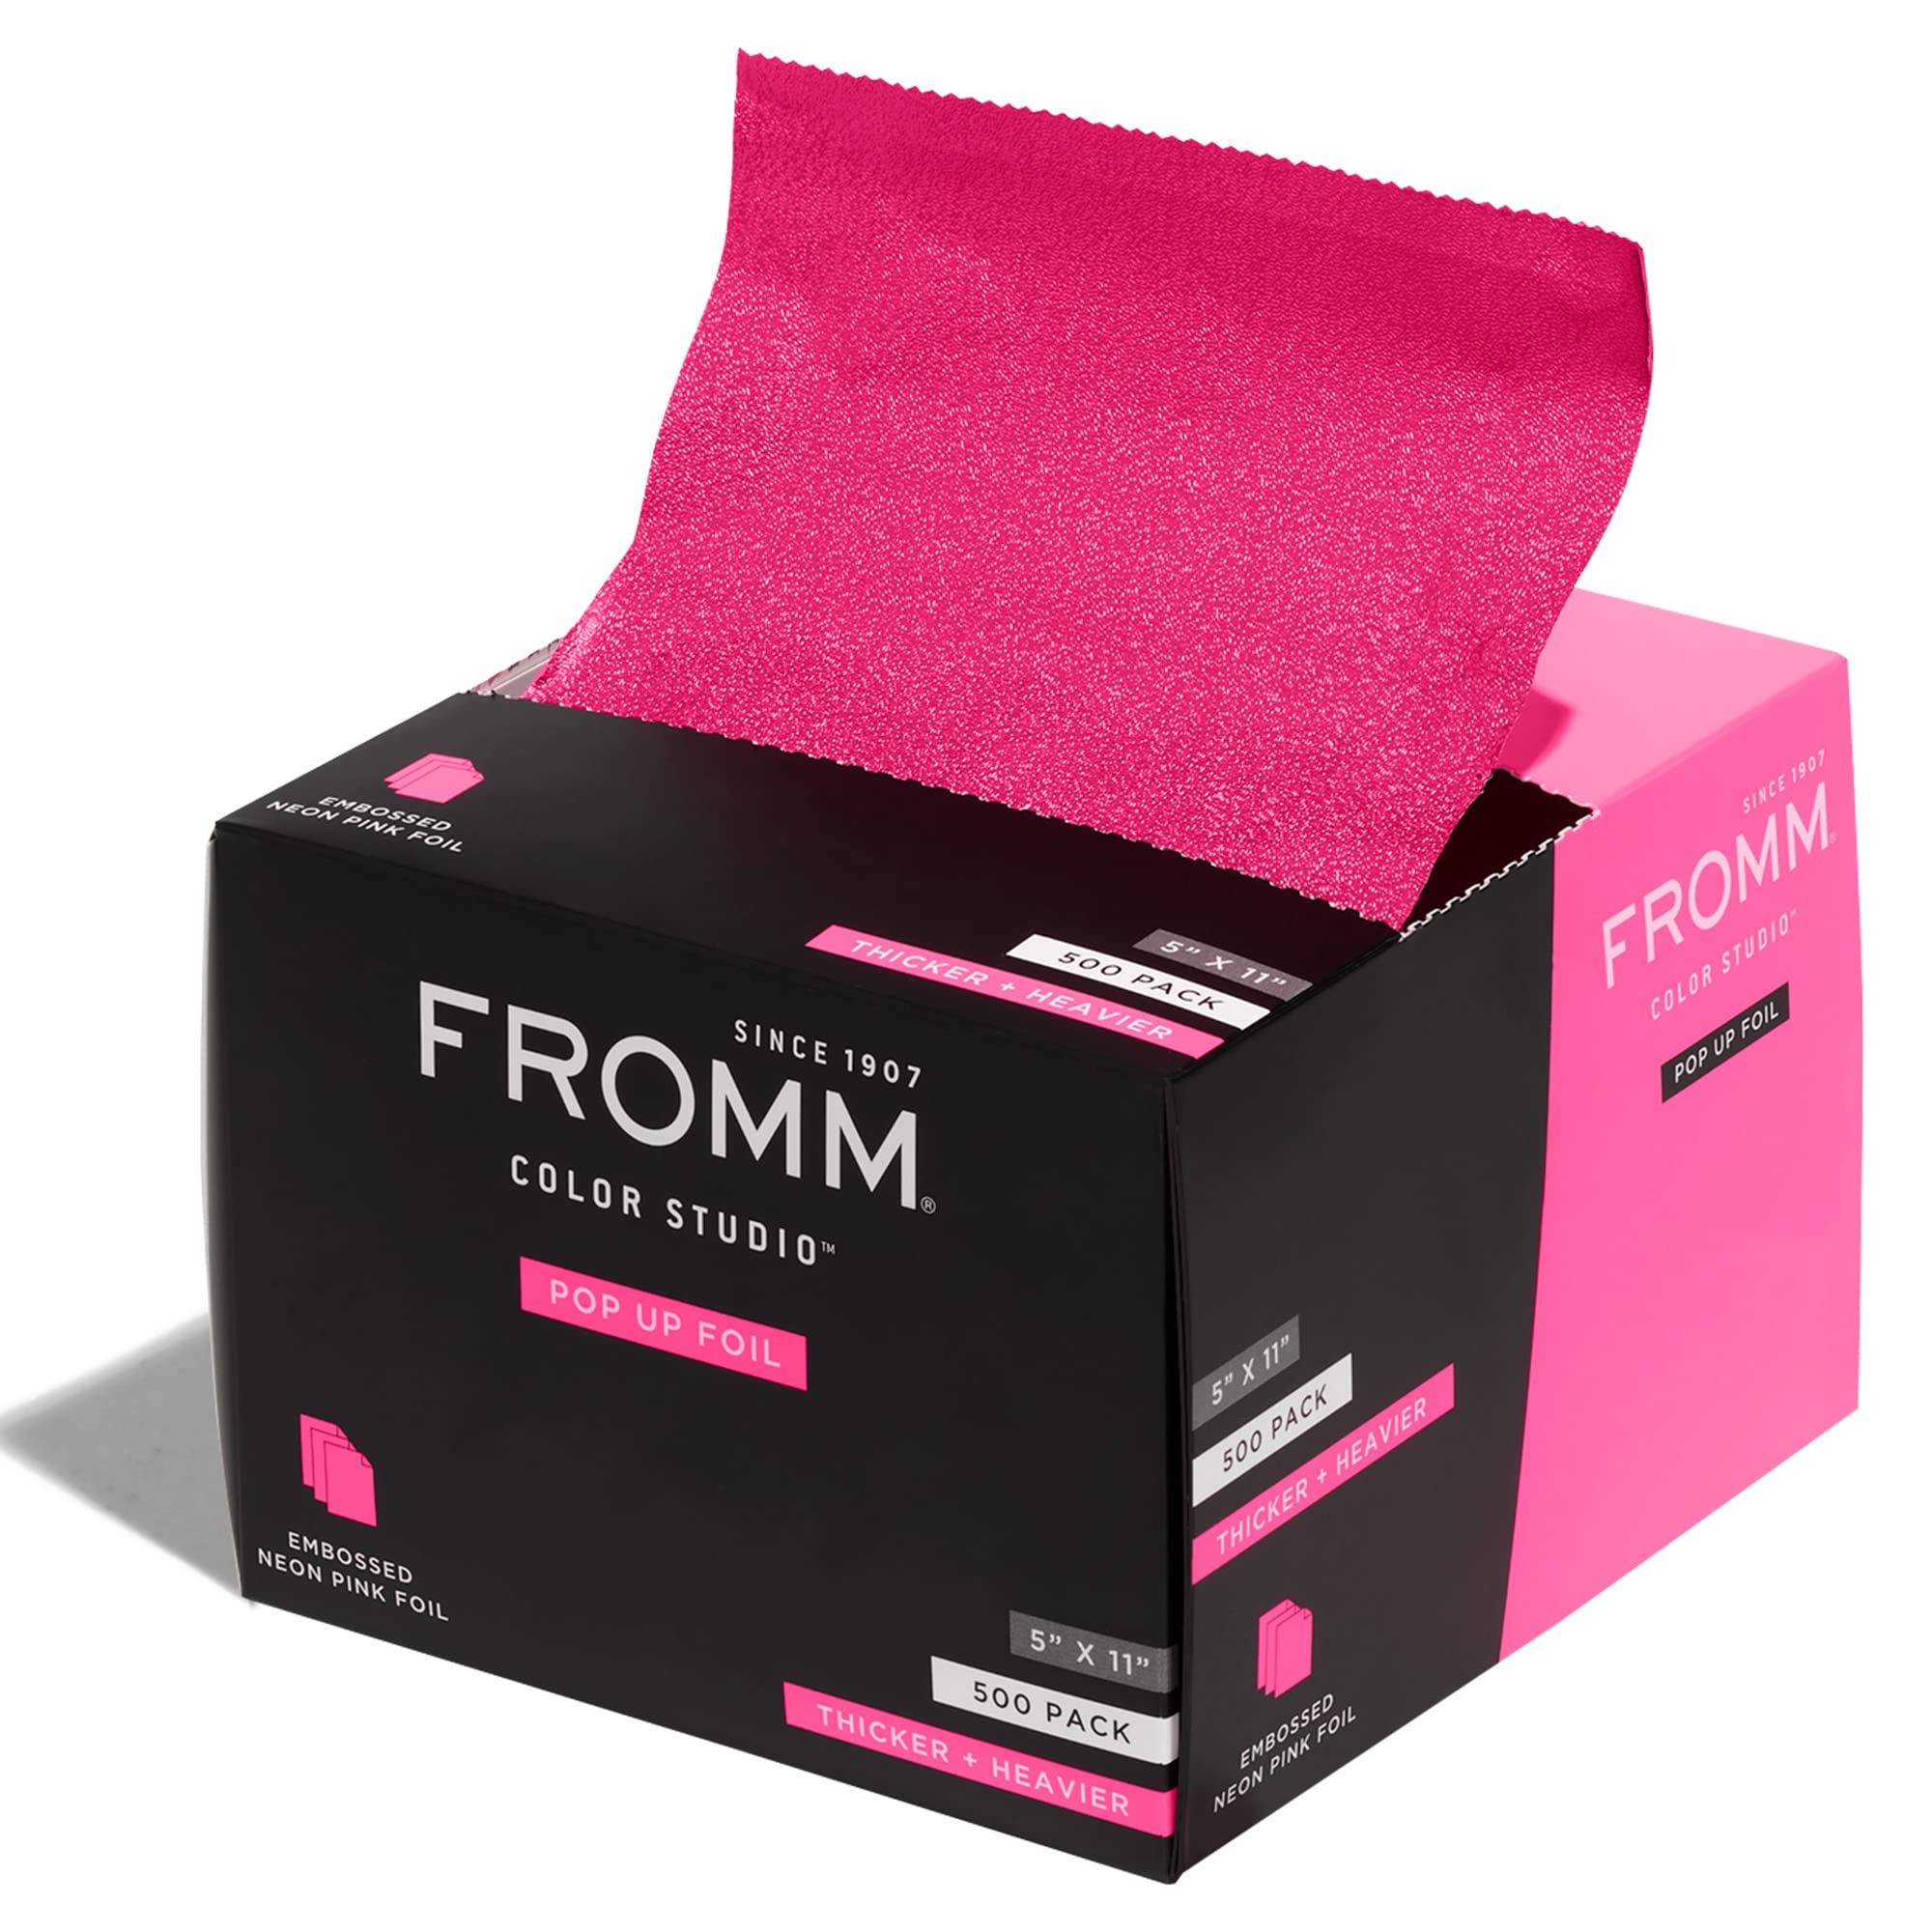 Fromm Color Studio Pop Up Hair Foil in Neon Pink, 5